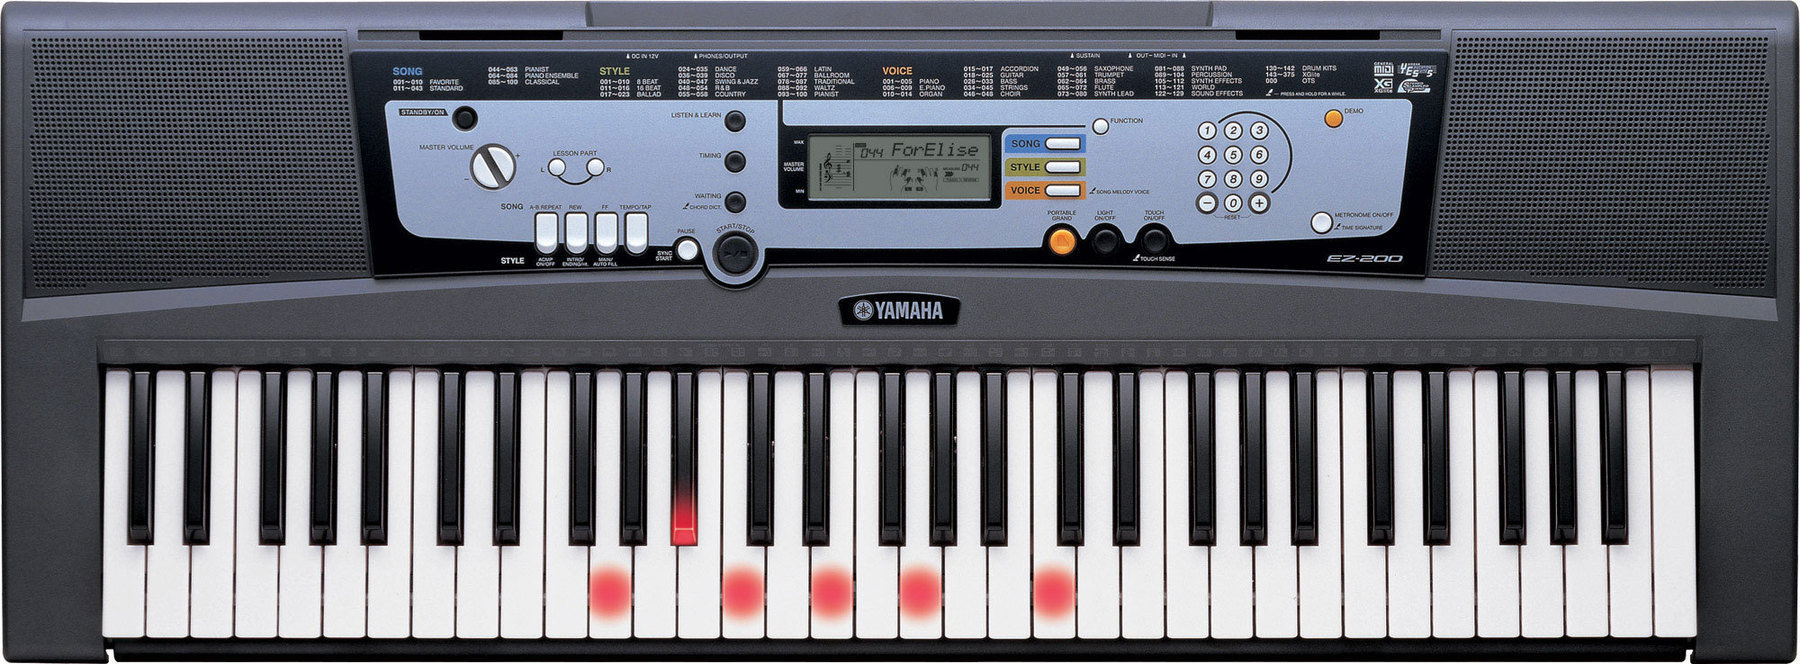 Keyboard with Touch Response Yamaha EZ 200